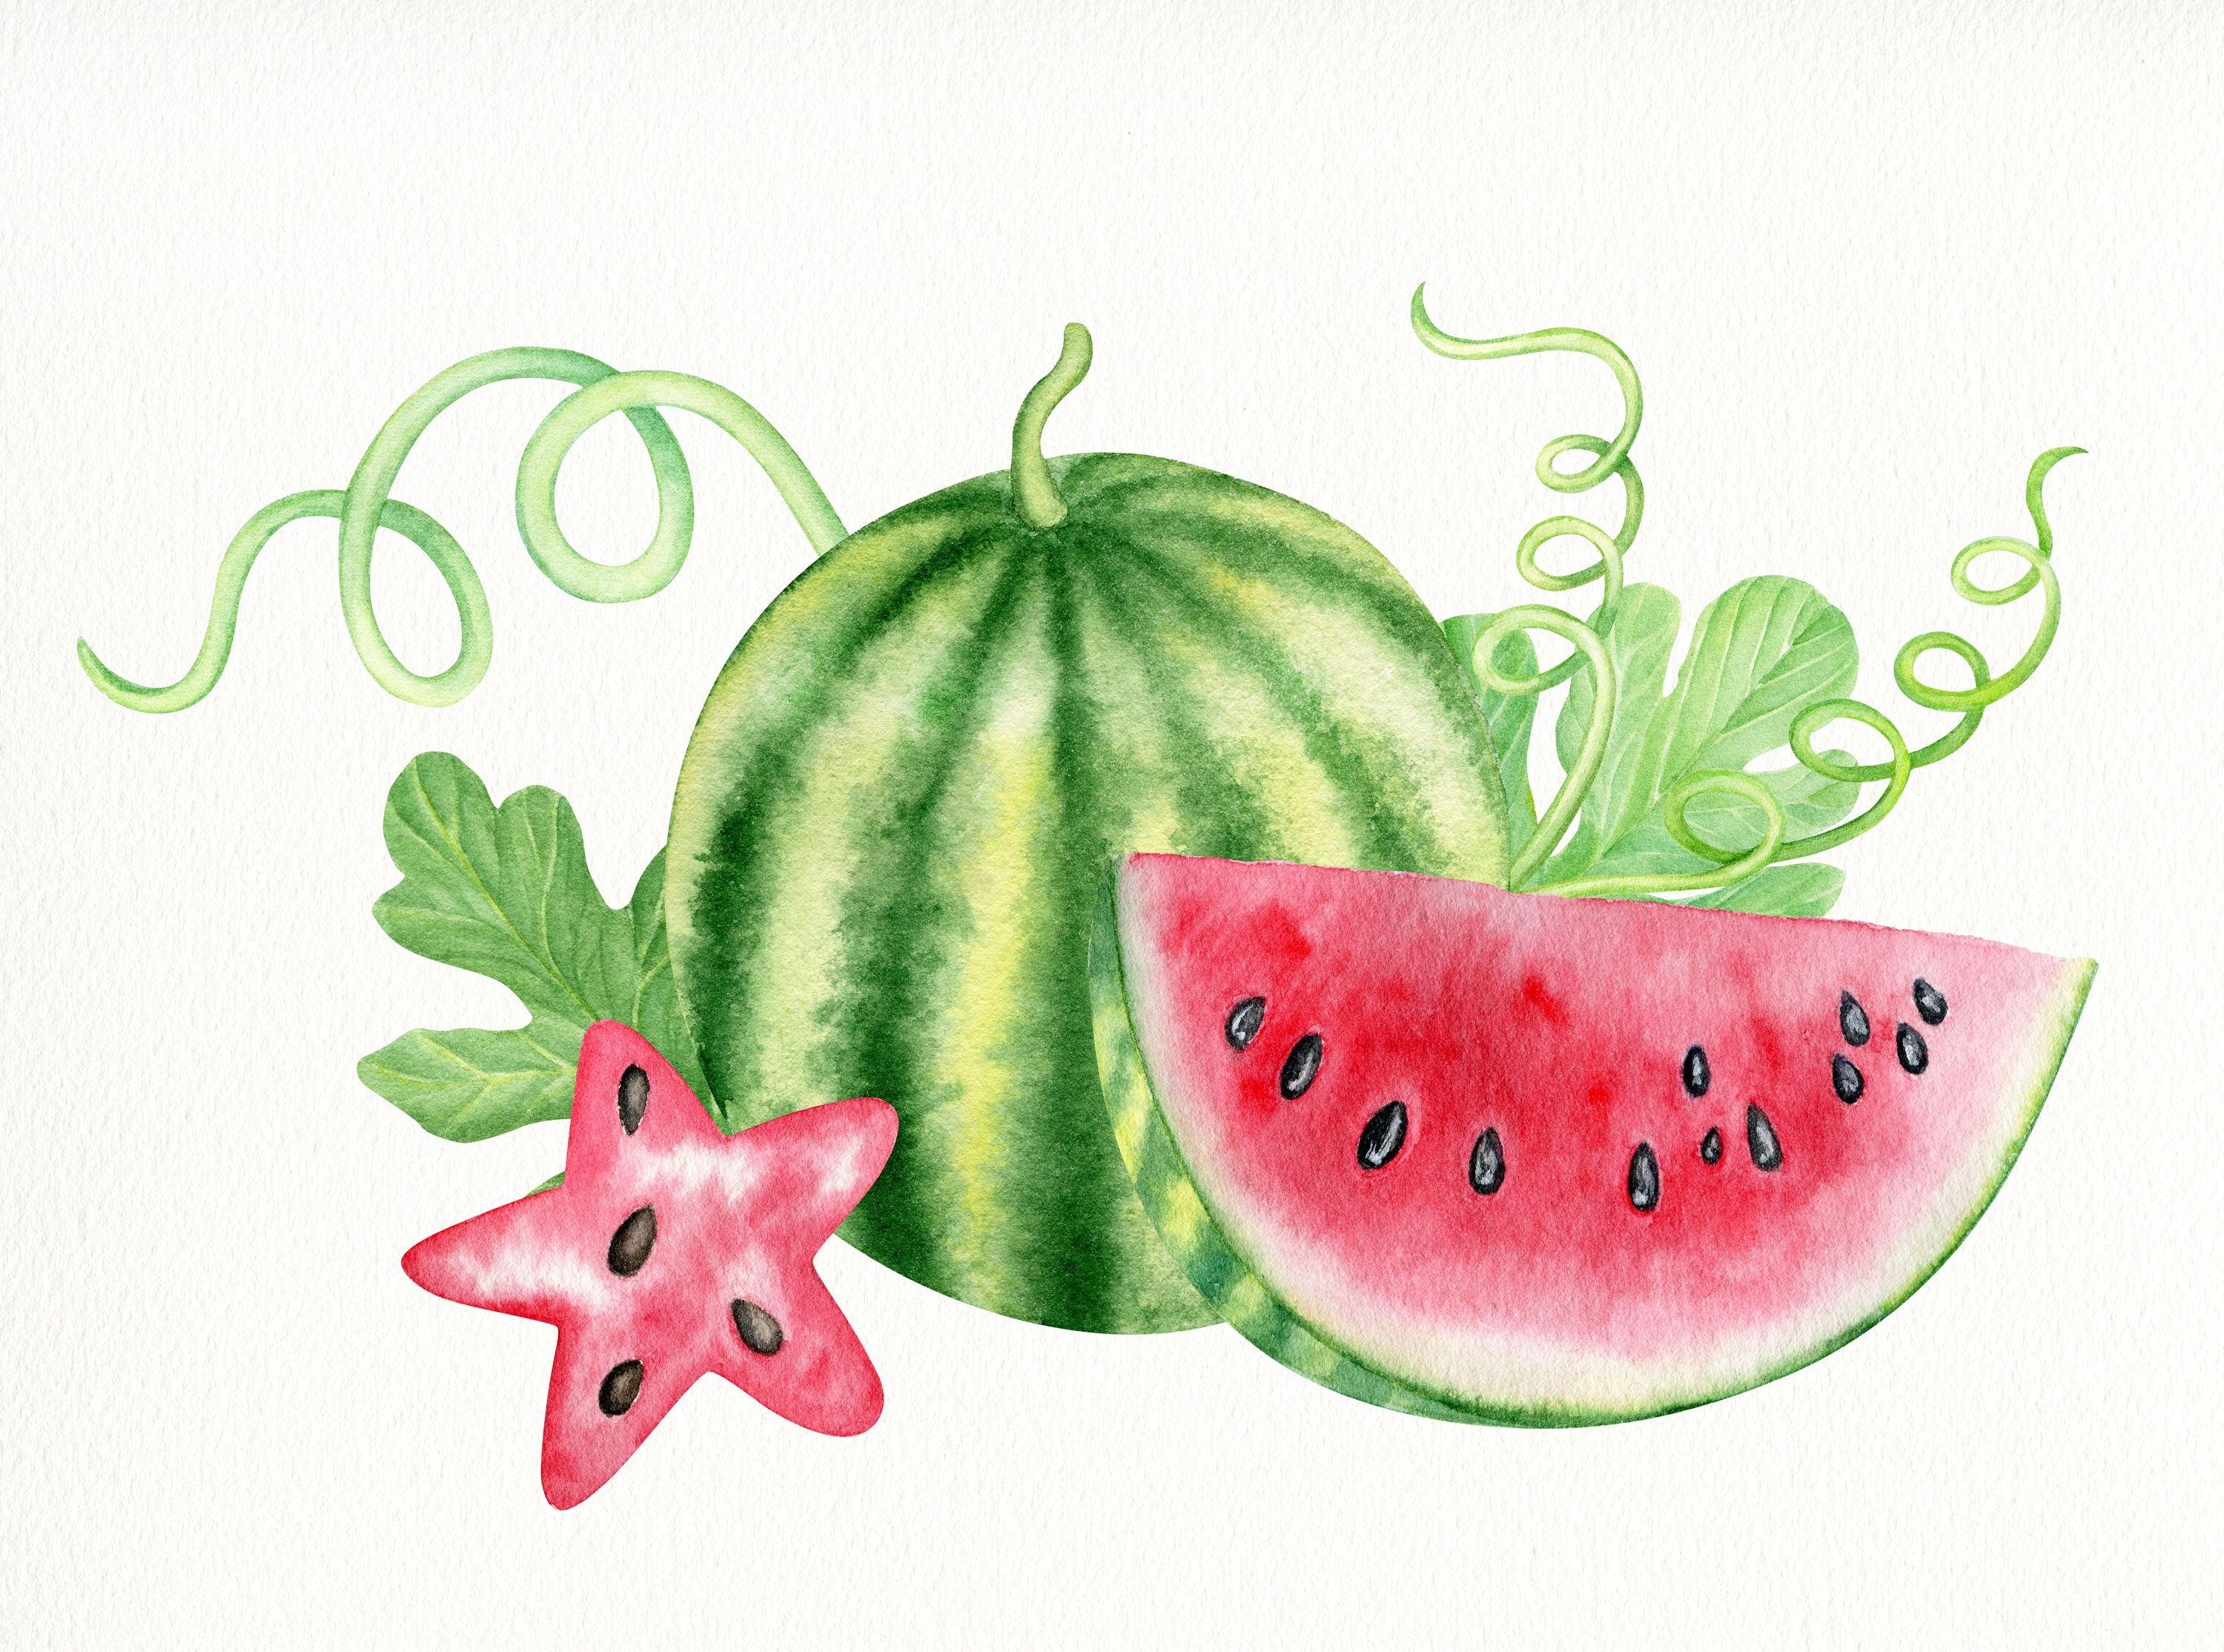 22-000-juicy-watermelon-illustrations-royalty-free-vector-clip-art